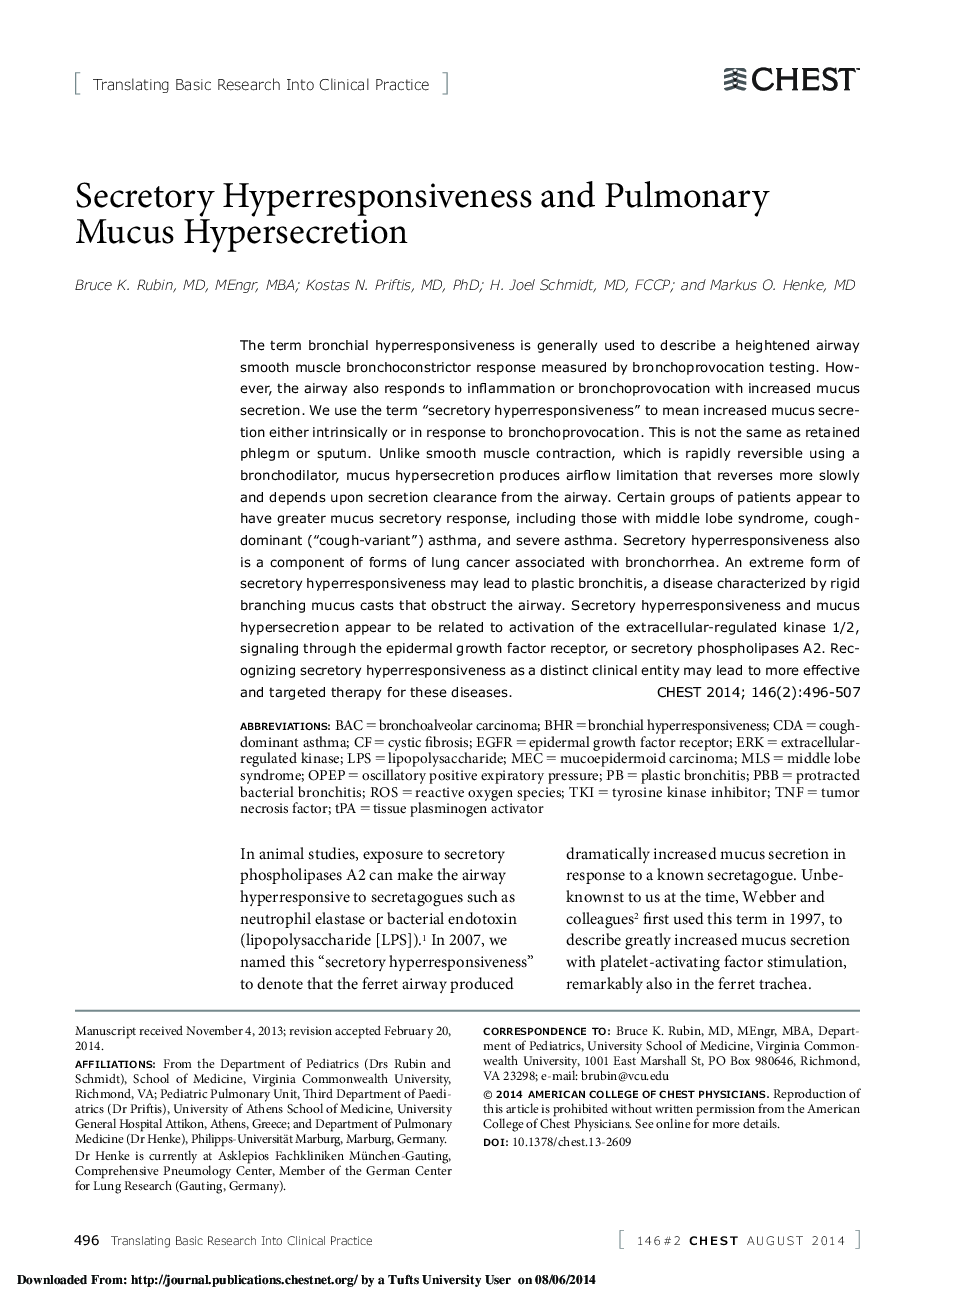 Secretory Hyperresponsiveness and Pulmonary Mucus Hypersecretion